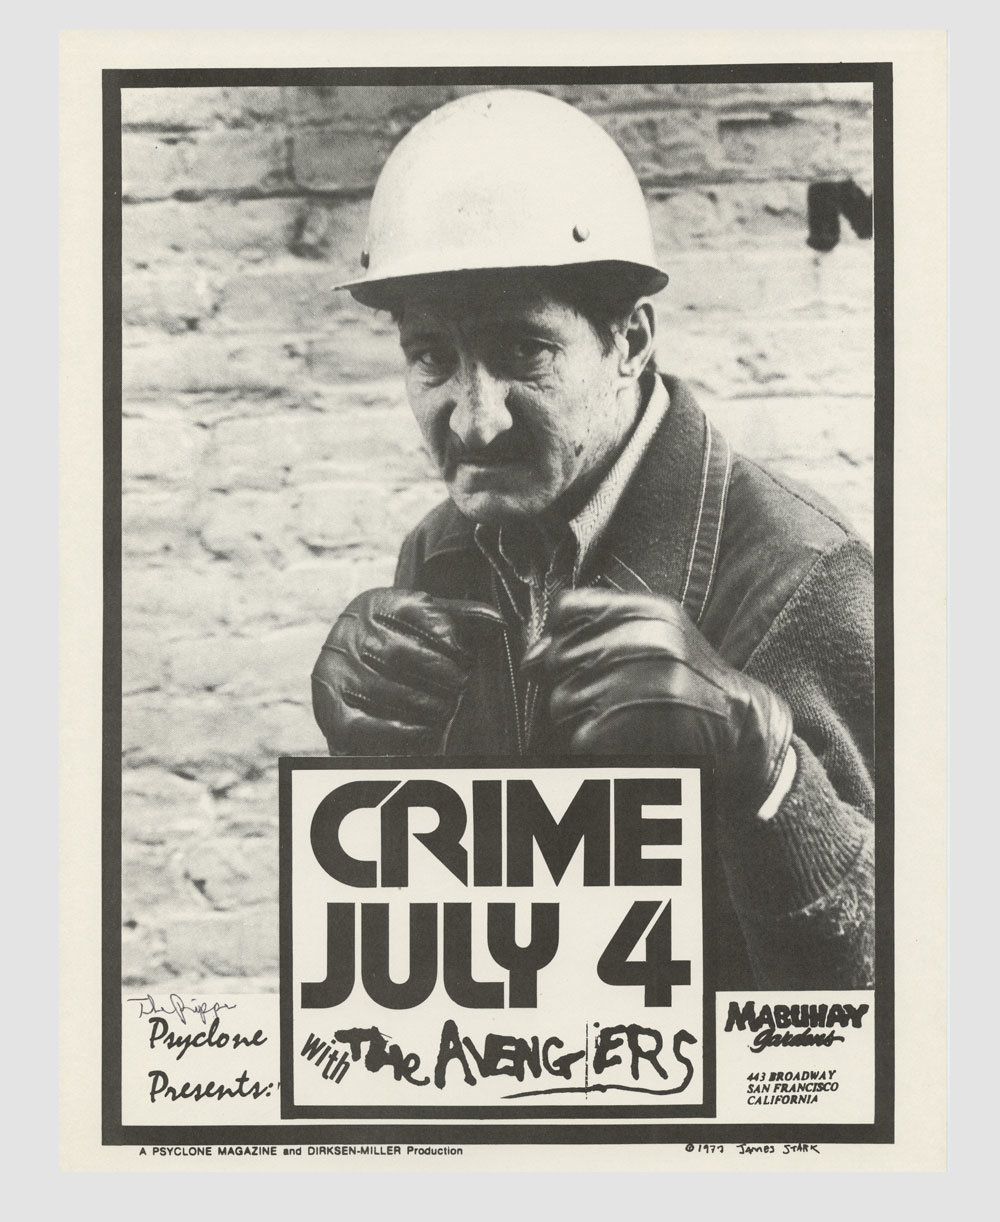 Crime Handbill 1977 Jul 4 Mabuhay Gardens Ron Greco signed